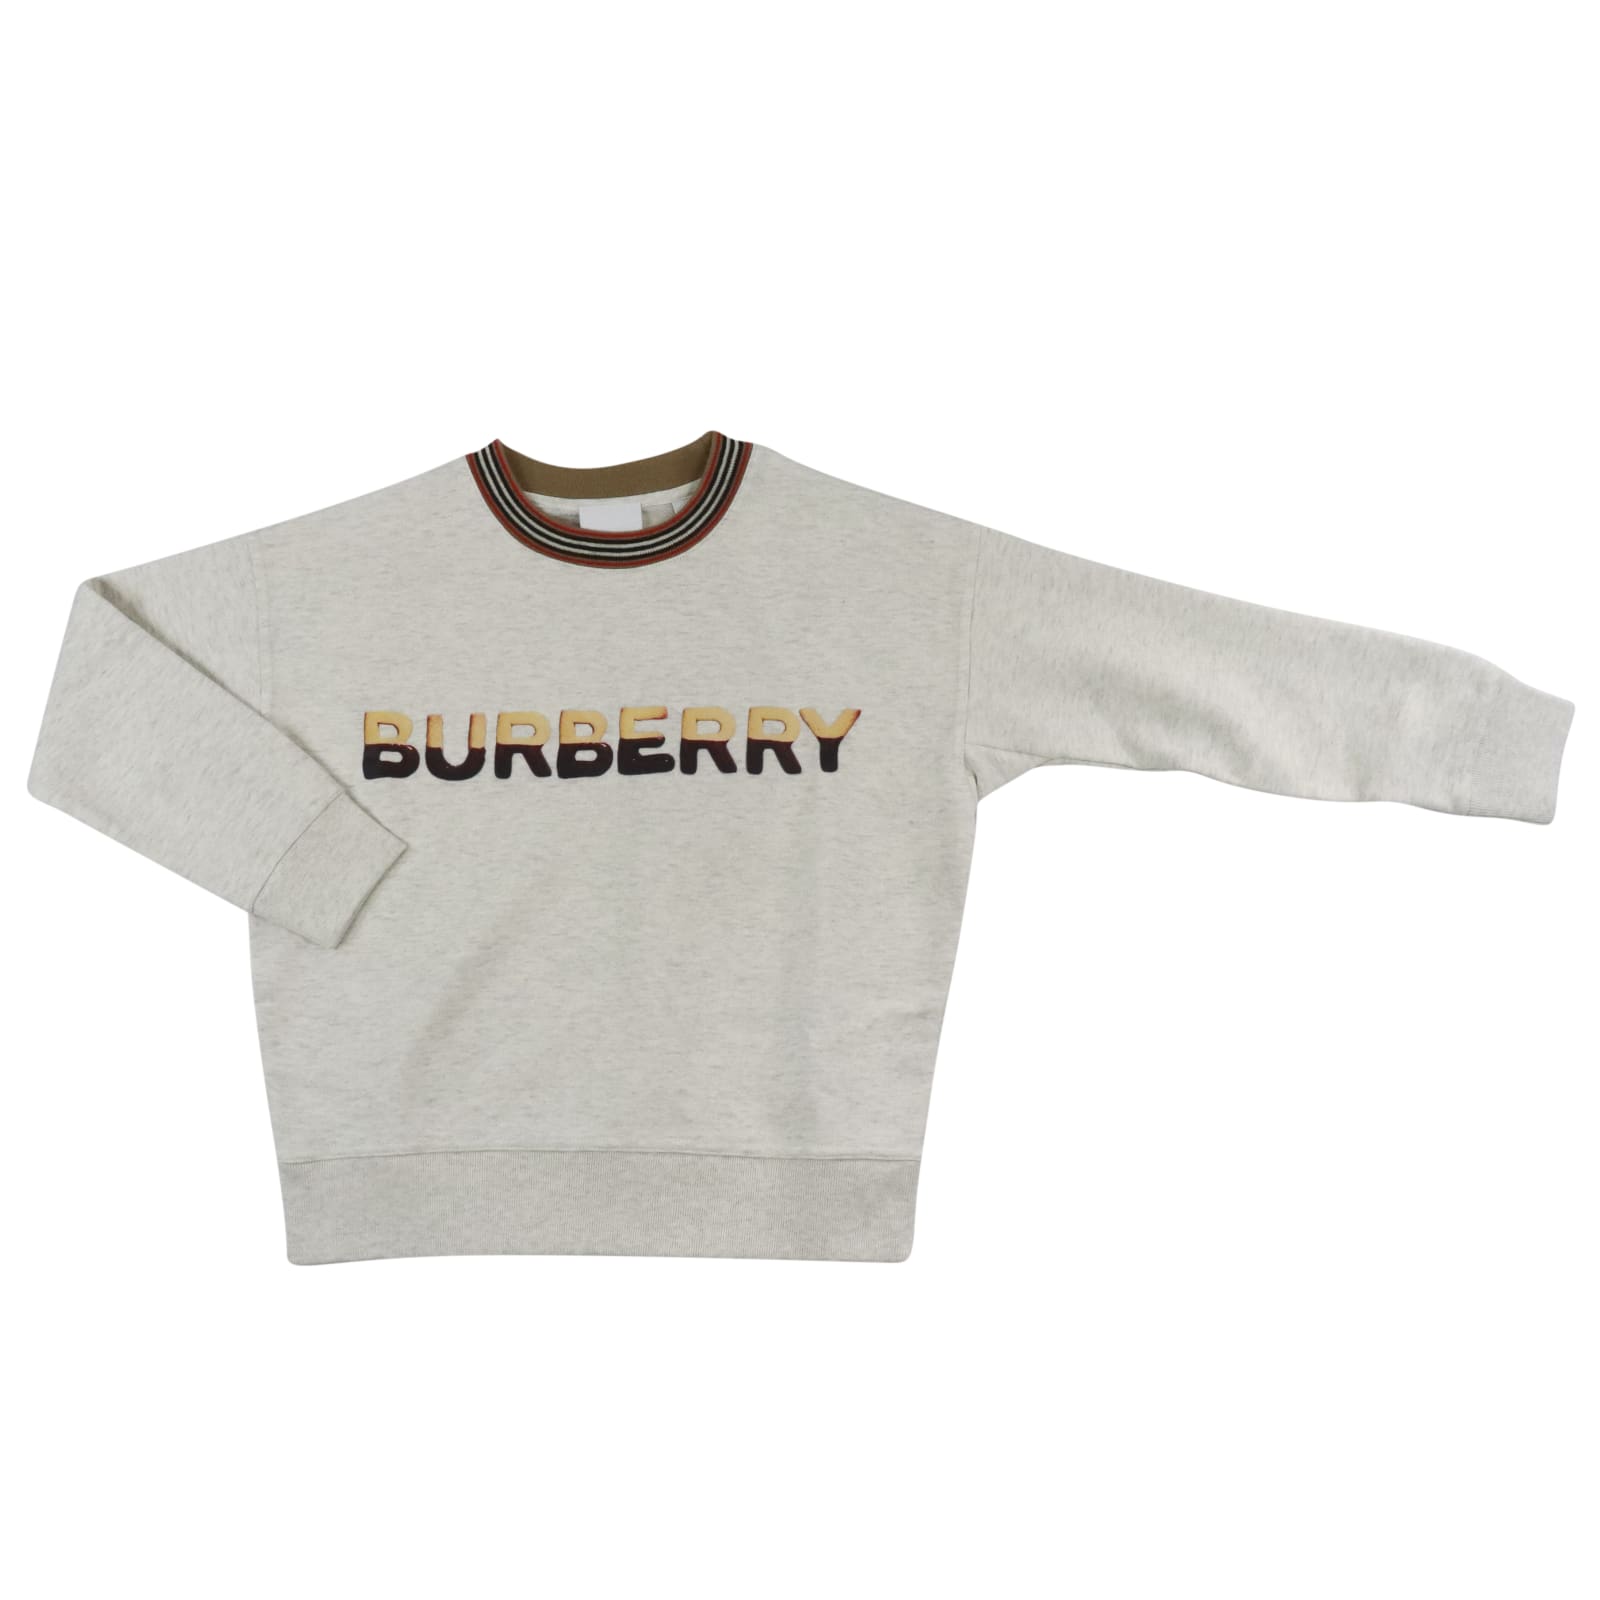 Burberry Shortbread Sweatshirt